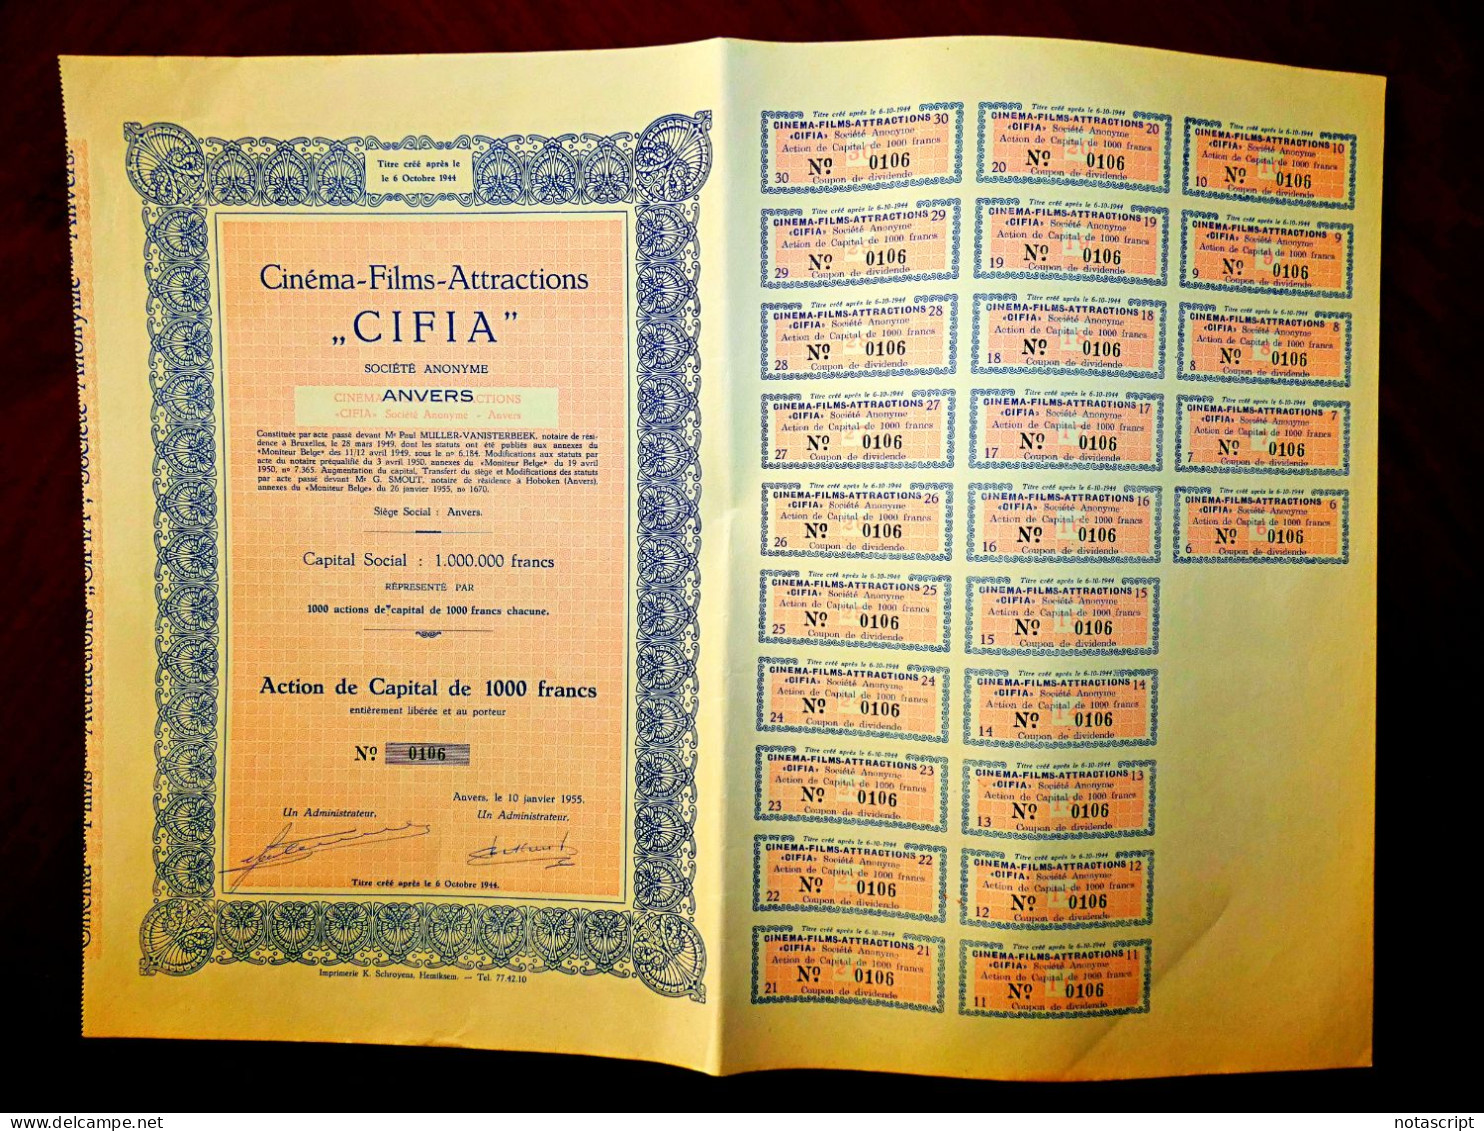 Cinéma Films Attractions CIFIA, Anvers 1955 Belgium  Sharecertificate - Cinema & Teatro